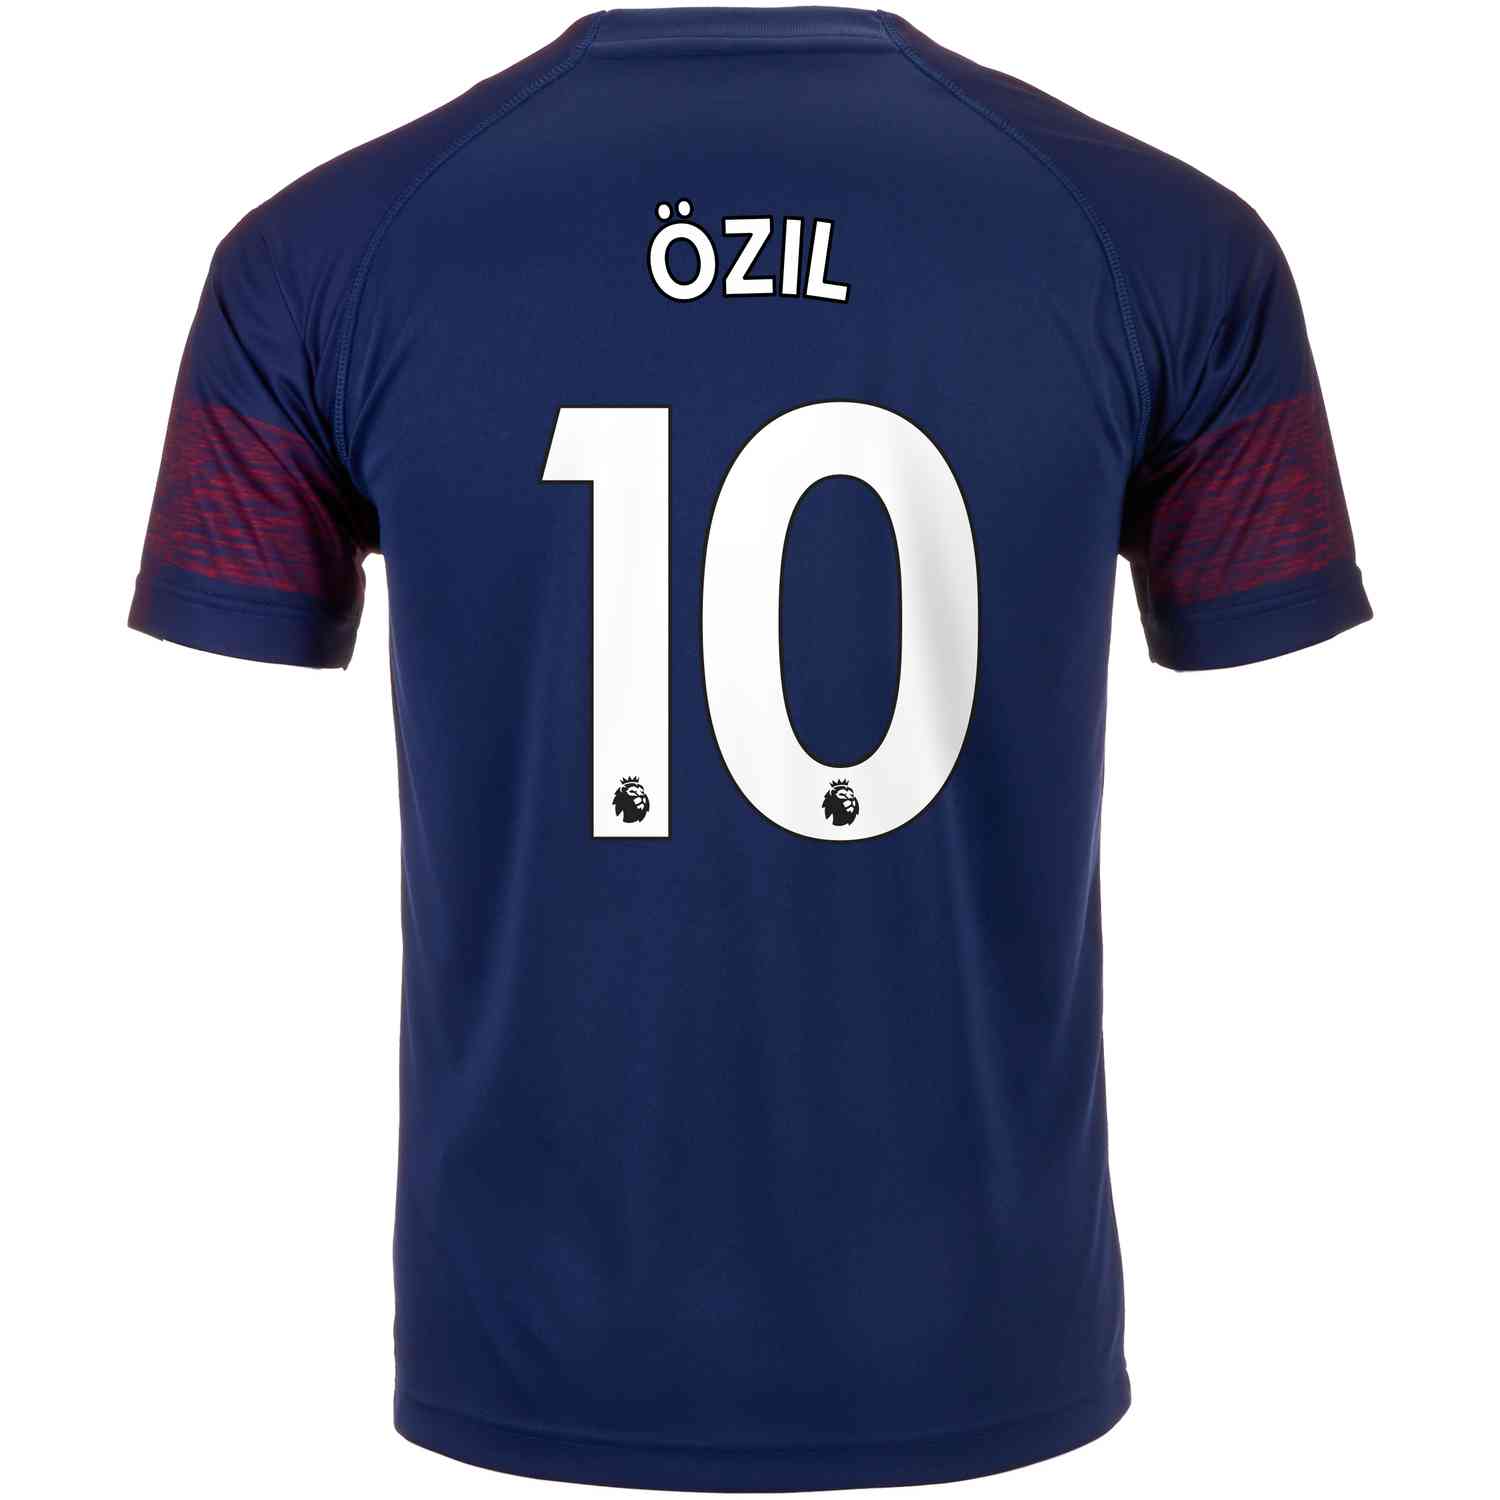 753213 13ozi Puma Mesut Ozil Arsenal Away Jsy 01 